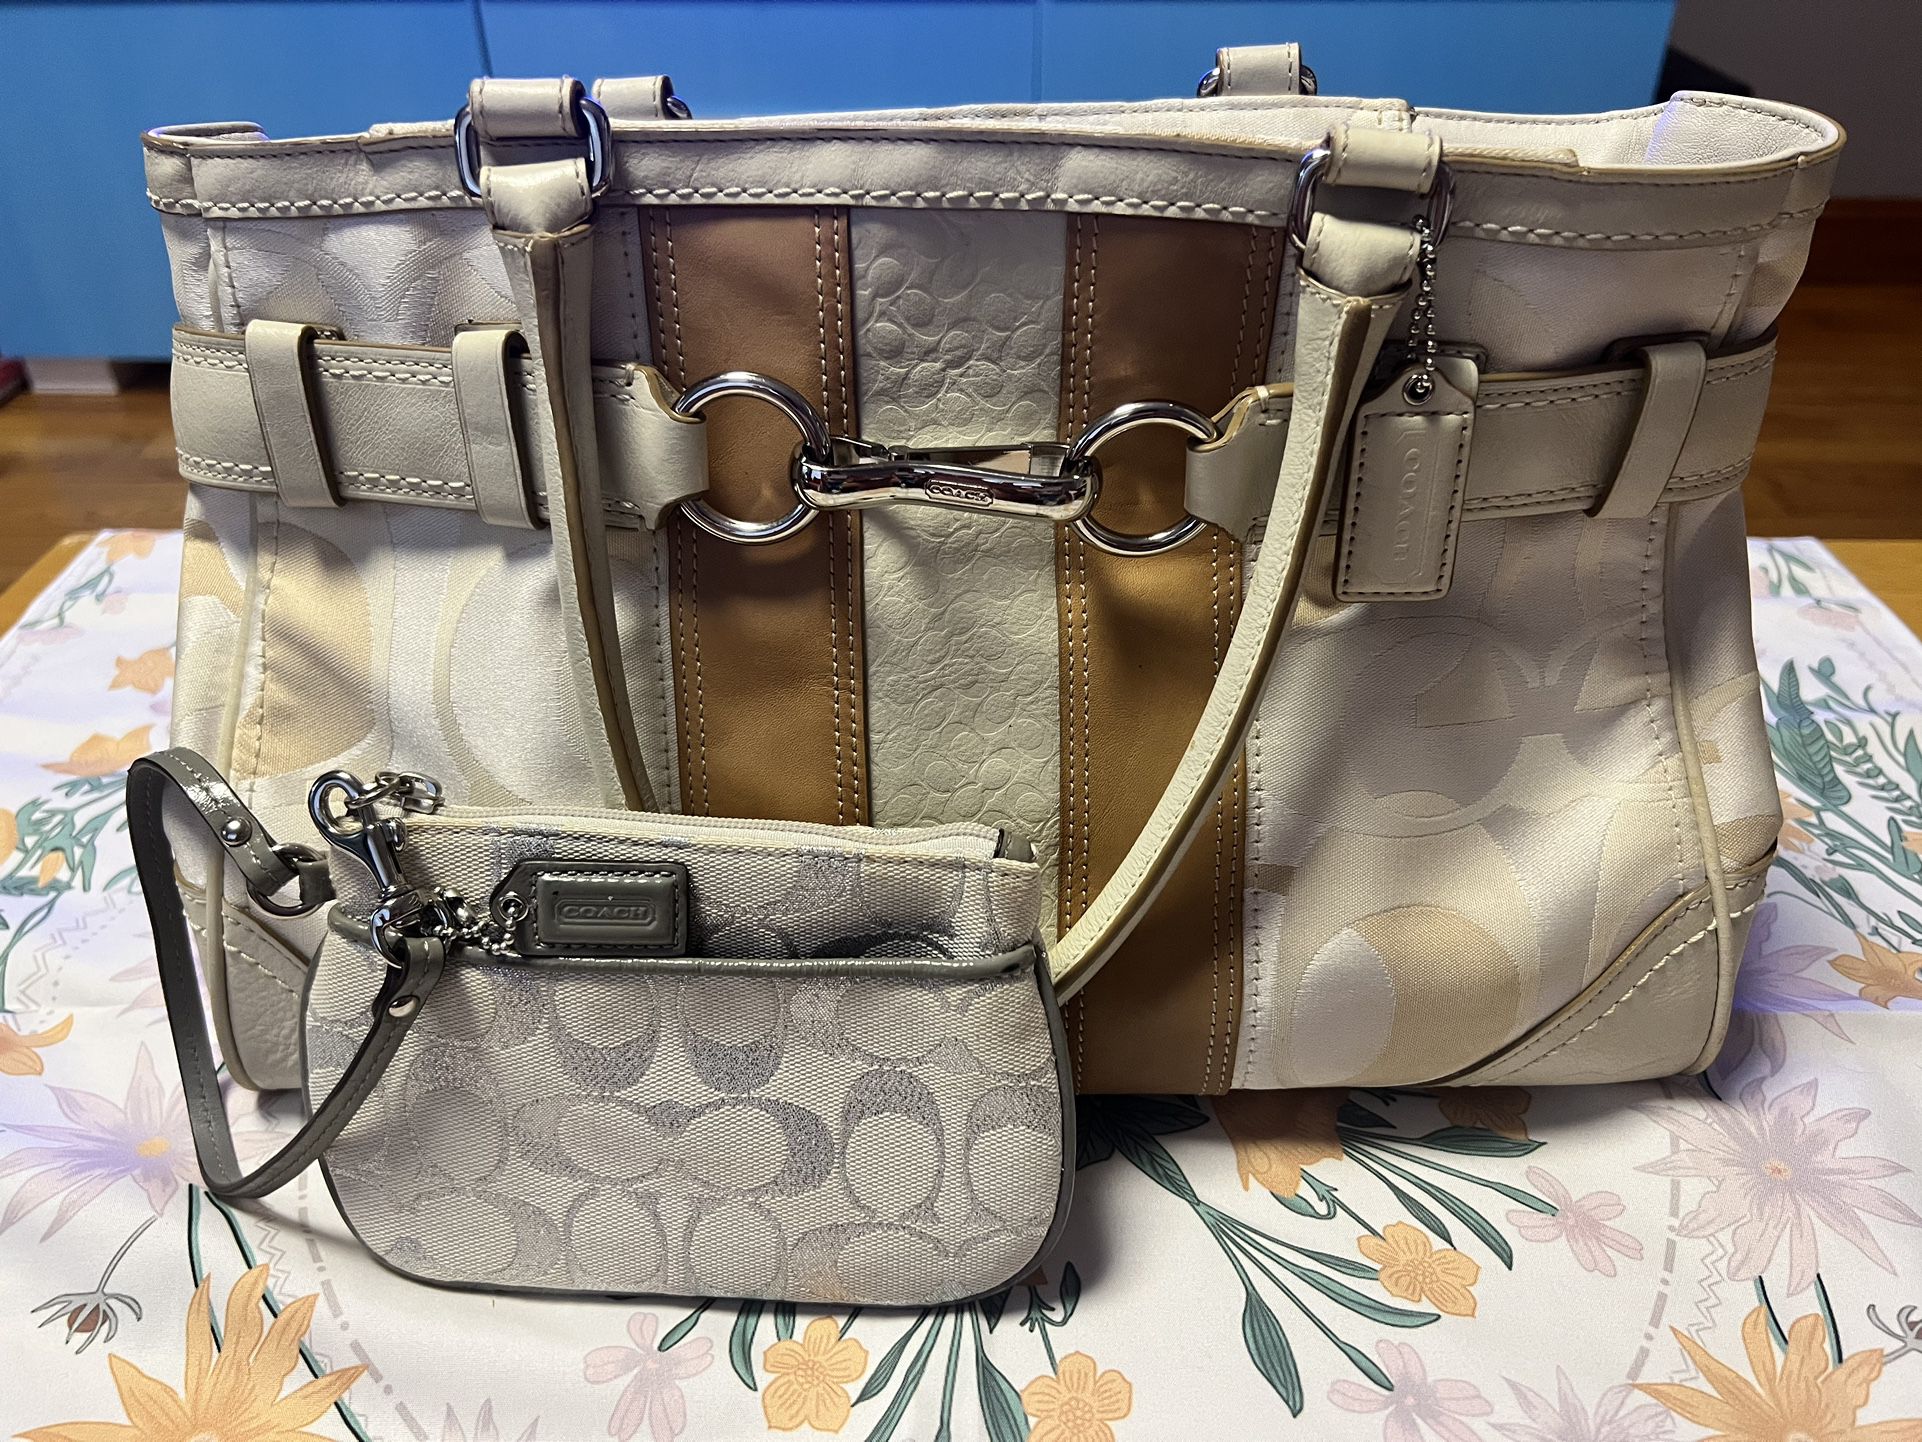 Authentic Handbags-Please Read Description!